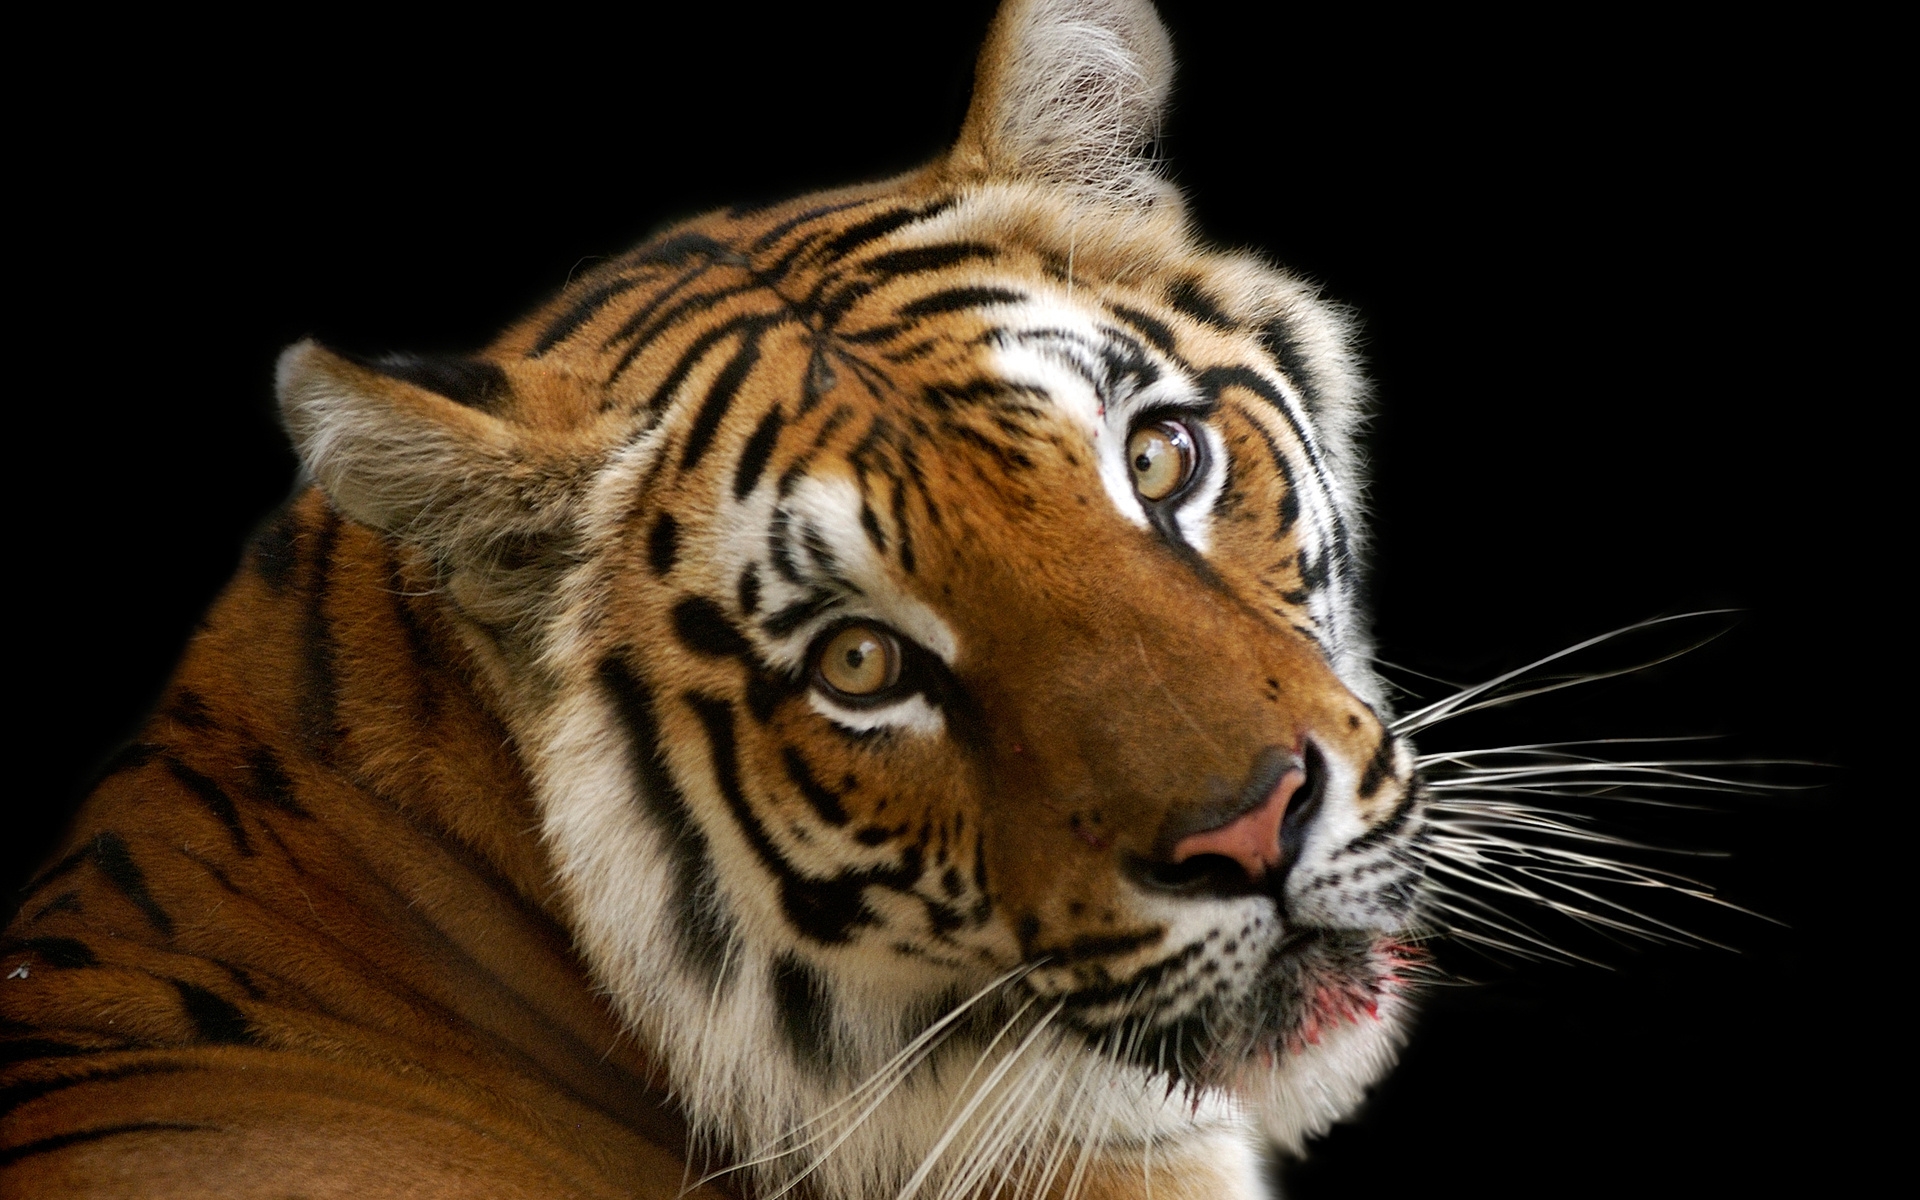 Wallpapers a tiger face a big cat on the desktop